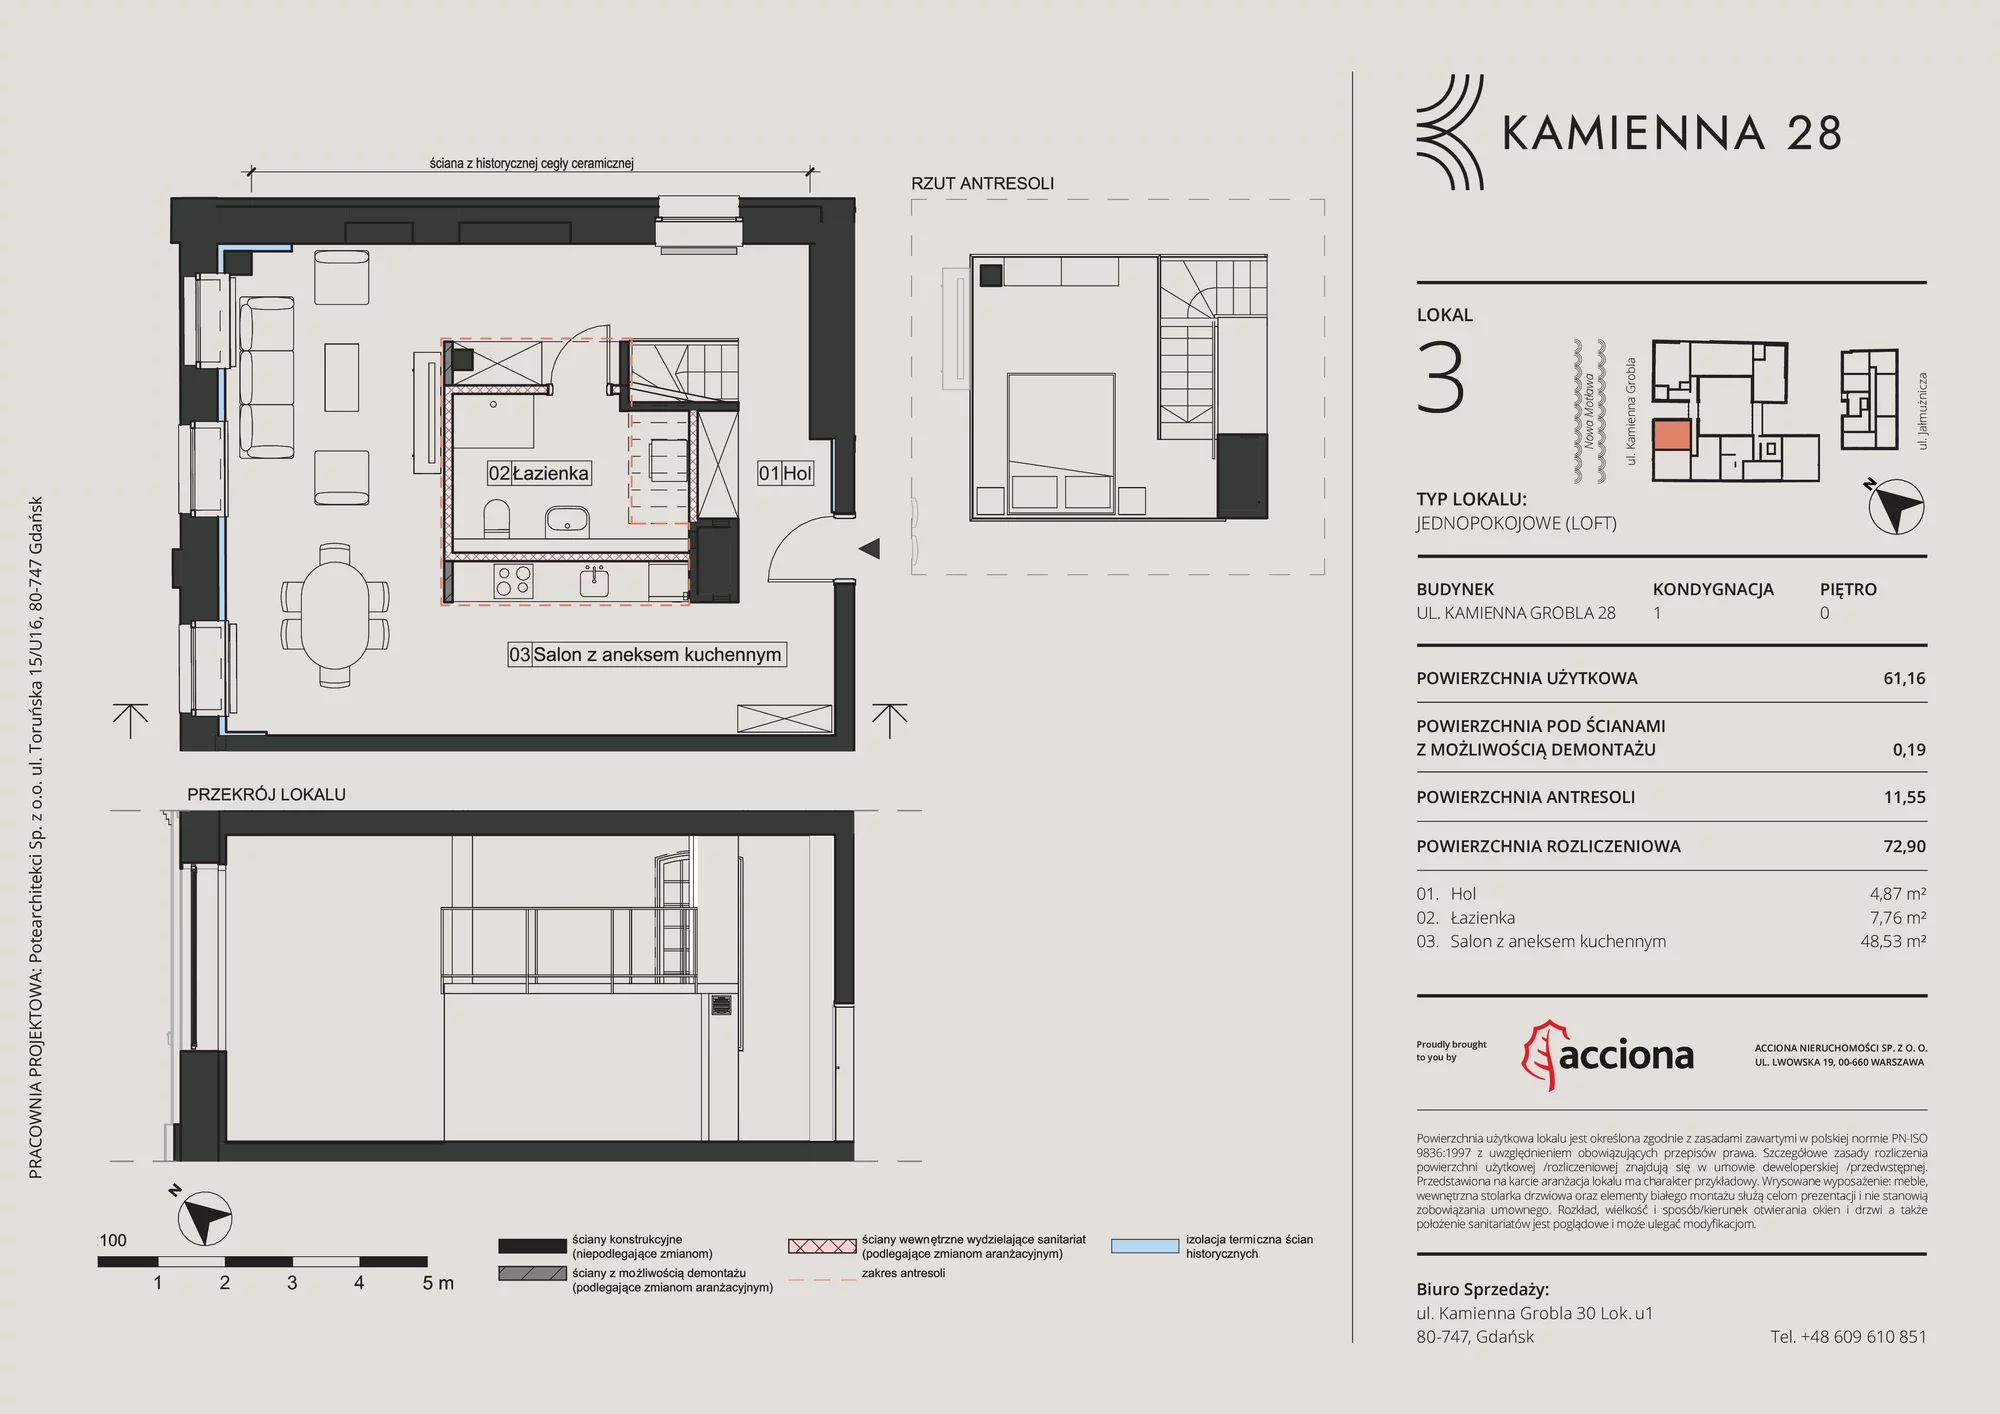 Apartament 72,90 m², parter, oferta nr 28.3, Kamienna 28, Gdańsk, Śródmieście, Dolne Miasto, ul. Kamienna Grobla 28/29